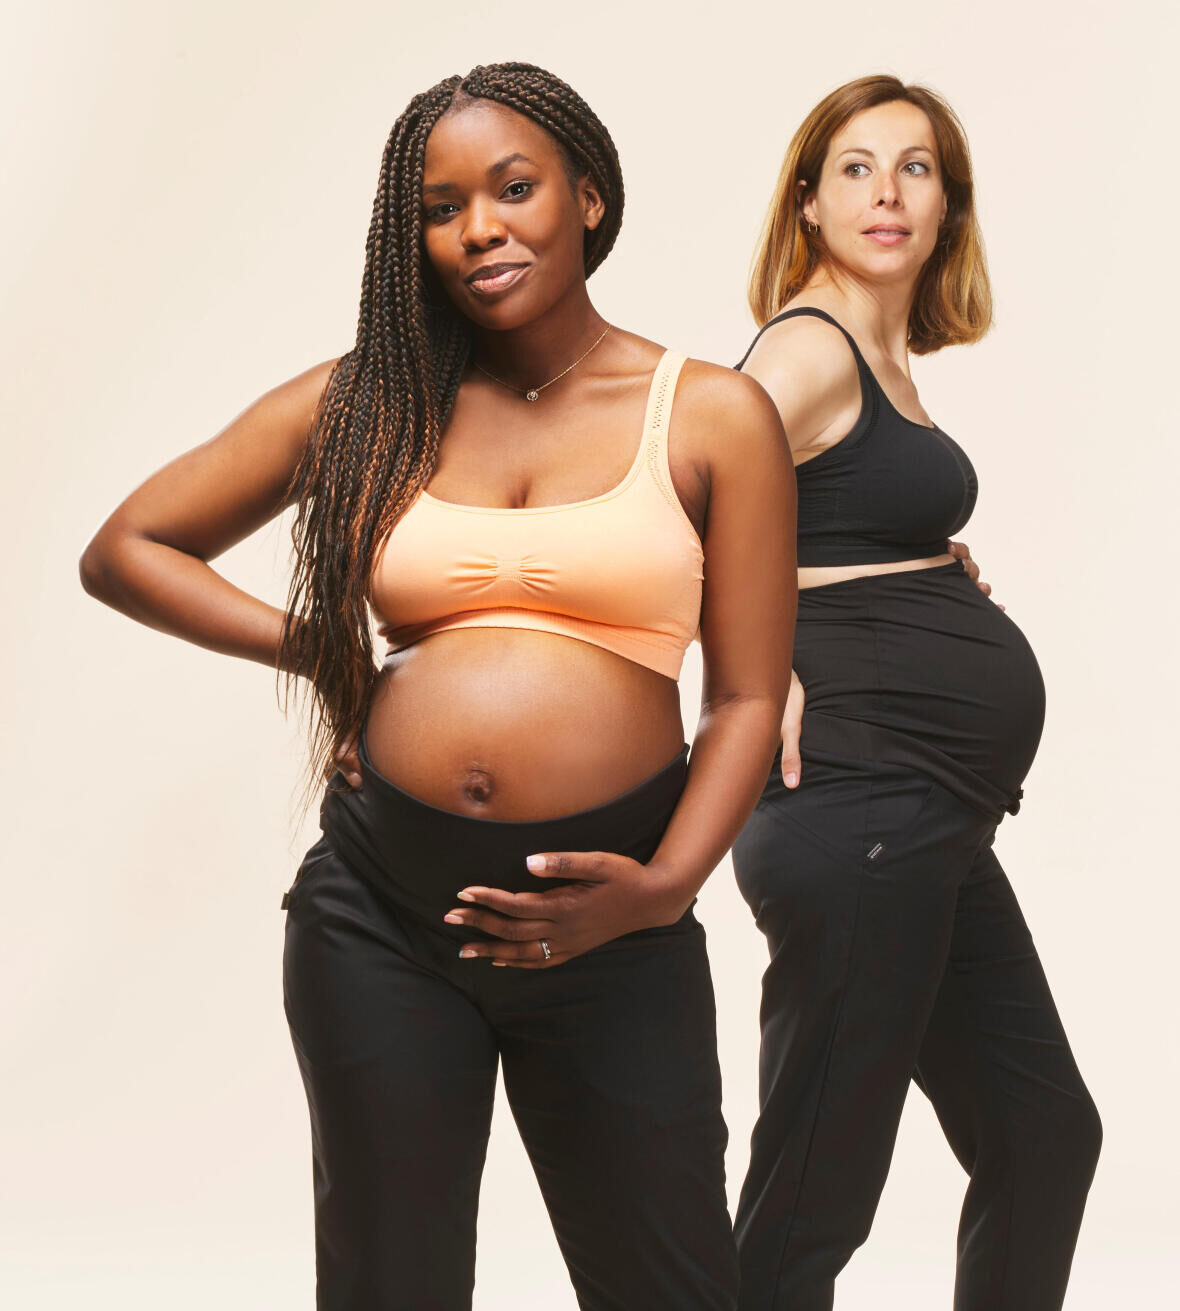 sport-pendant-la-grossesse